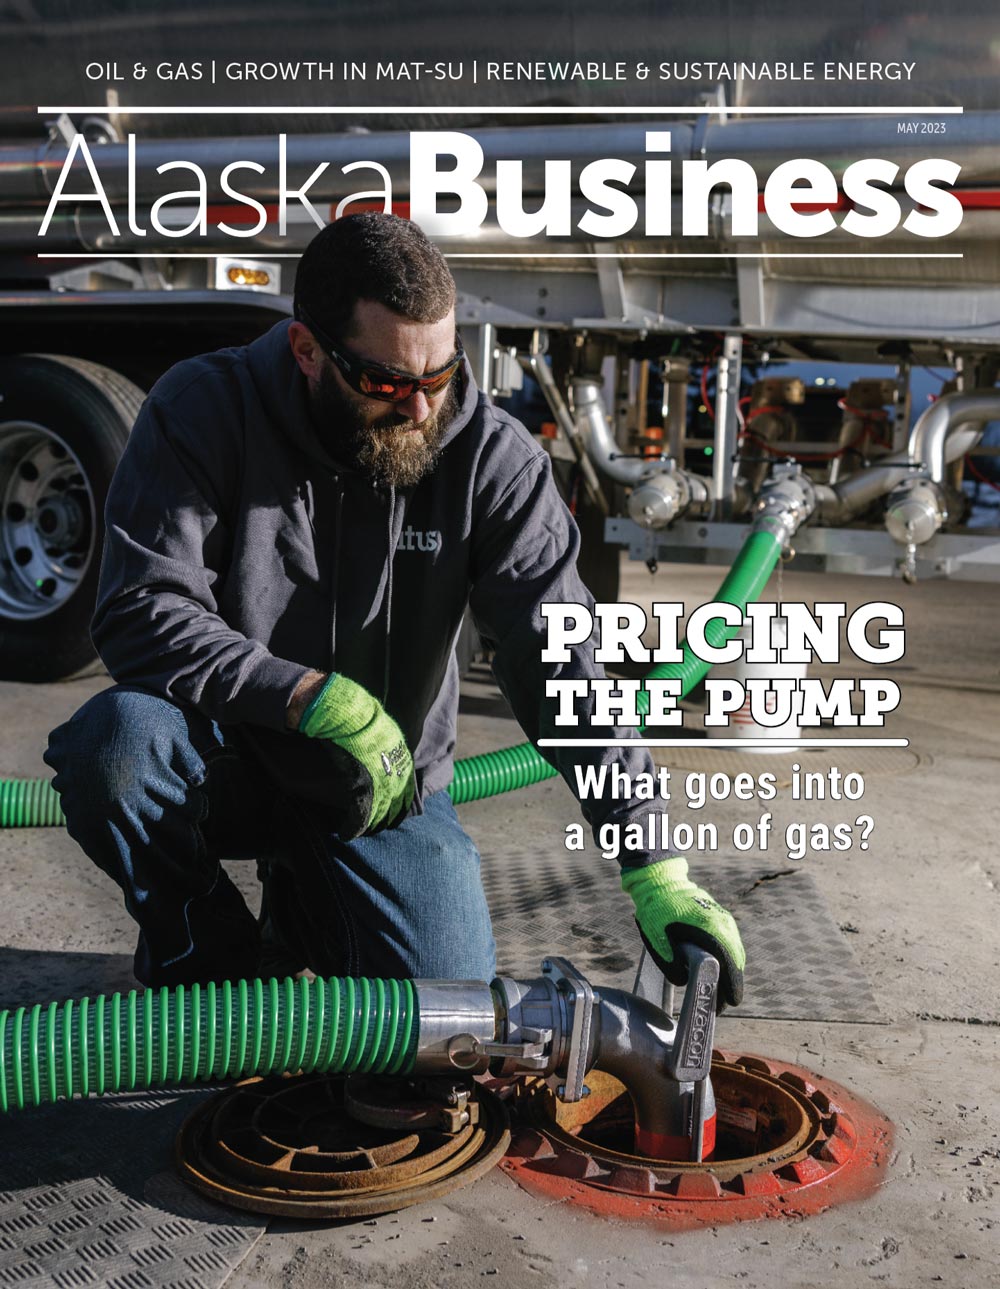 Alaska Business May 2023 cover